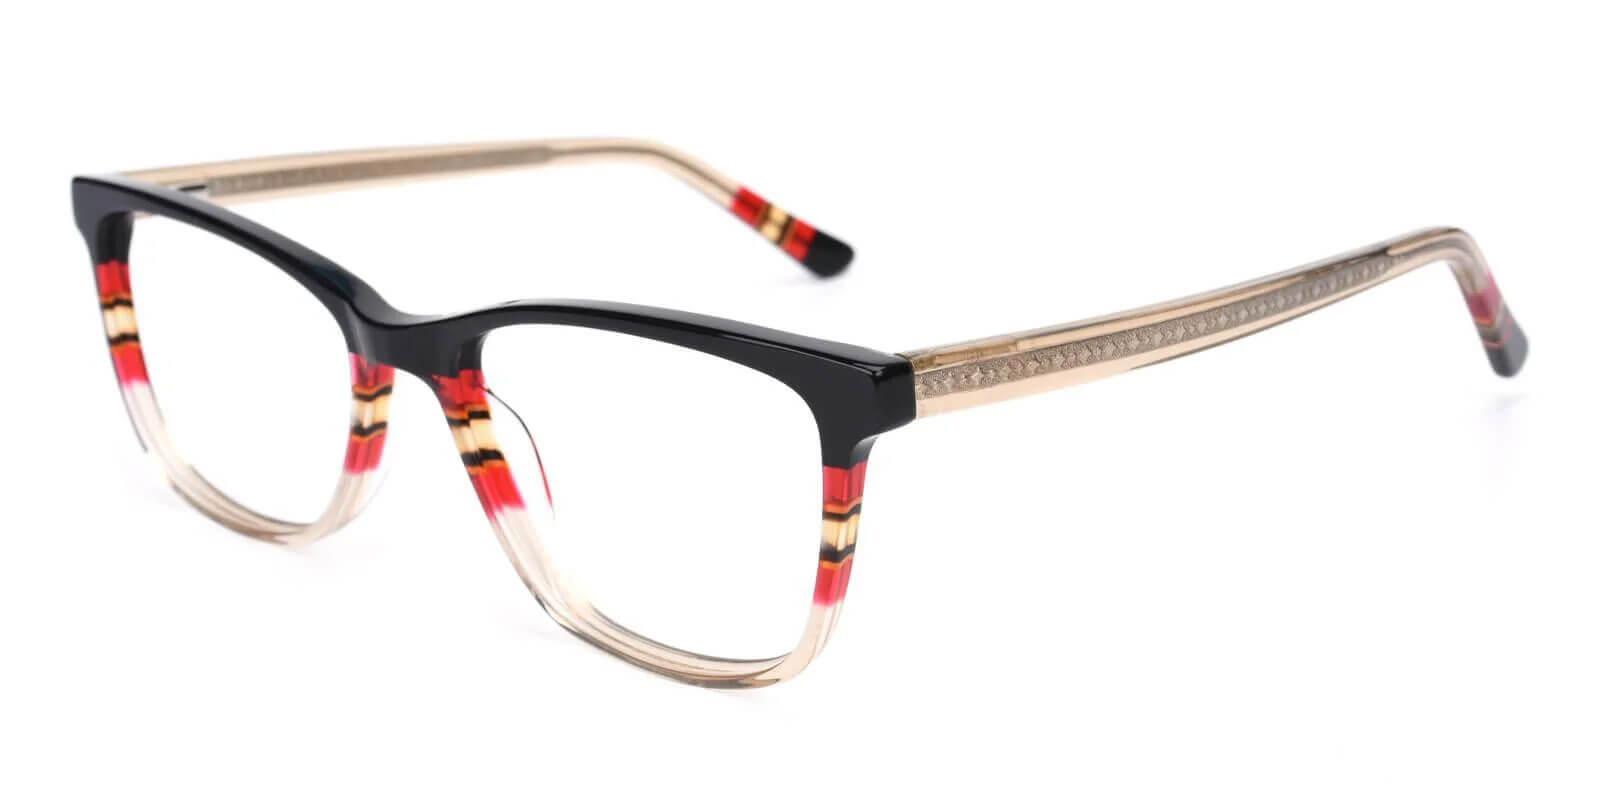 Wolfgang Yellow Acetate Eyeglasses , UniversalBridgeFit Frames from ABBE Glasses